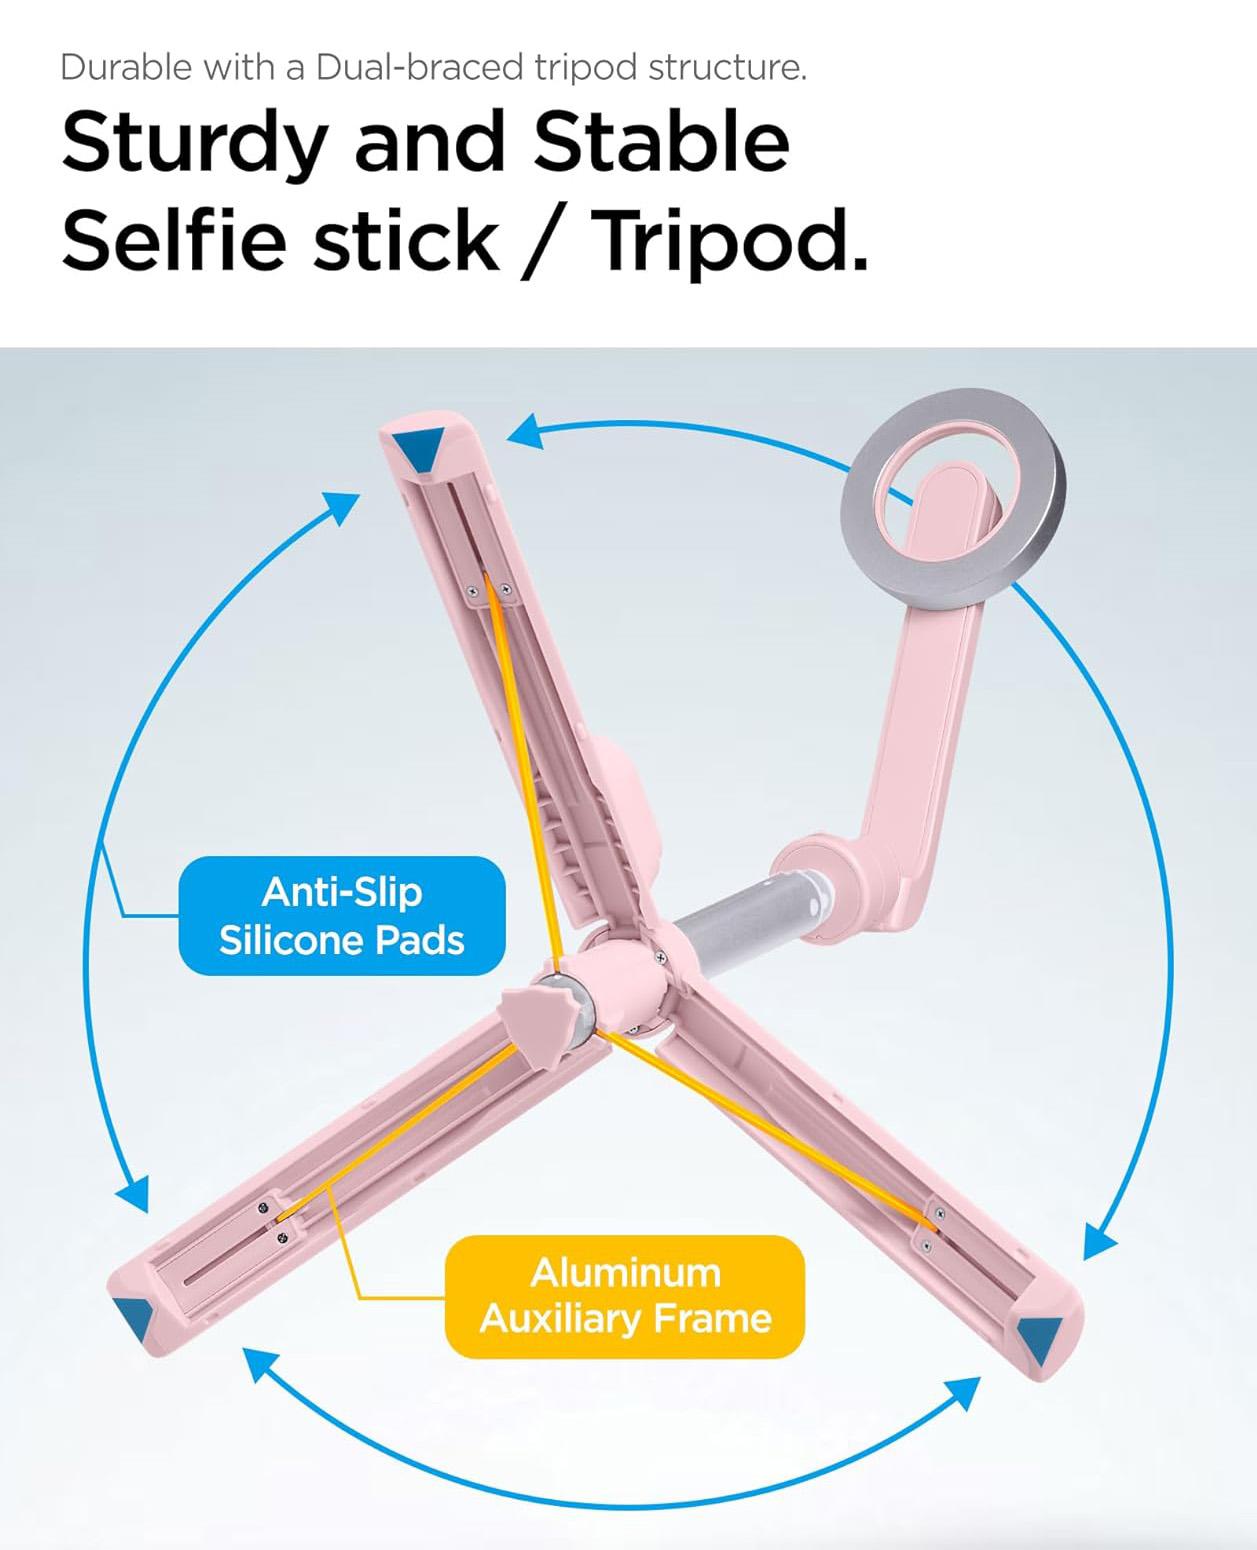 Spigen® S570W AMP06403 (MagFit) MagSafe Bluetooth Selfie Stick Tripod - Misty Rose